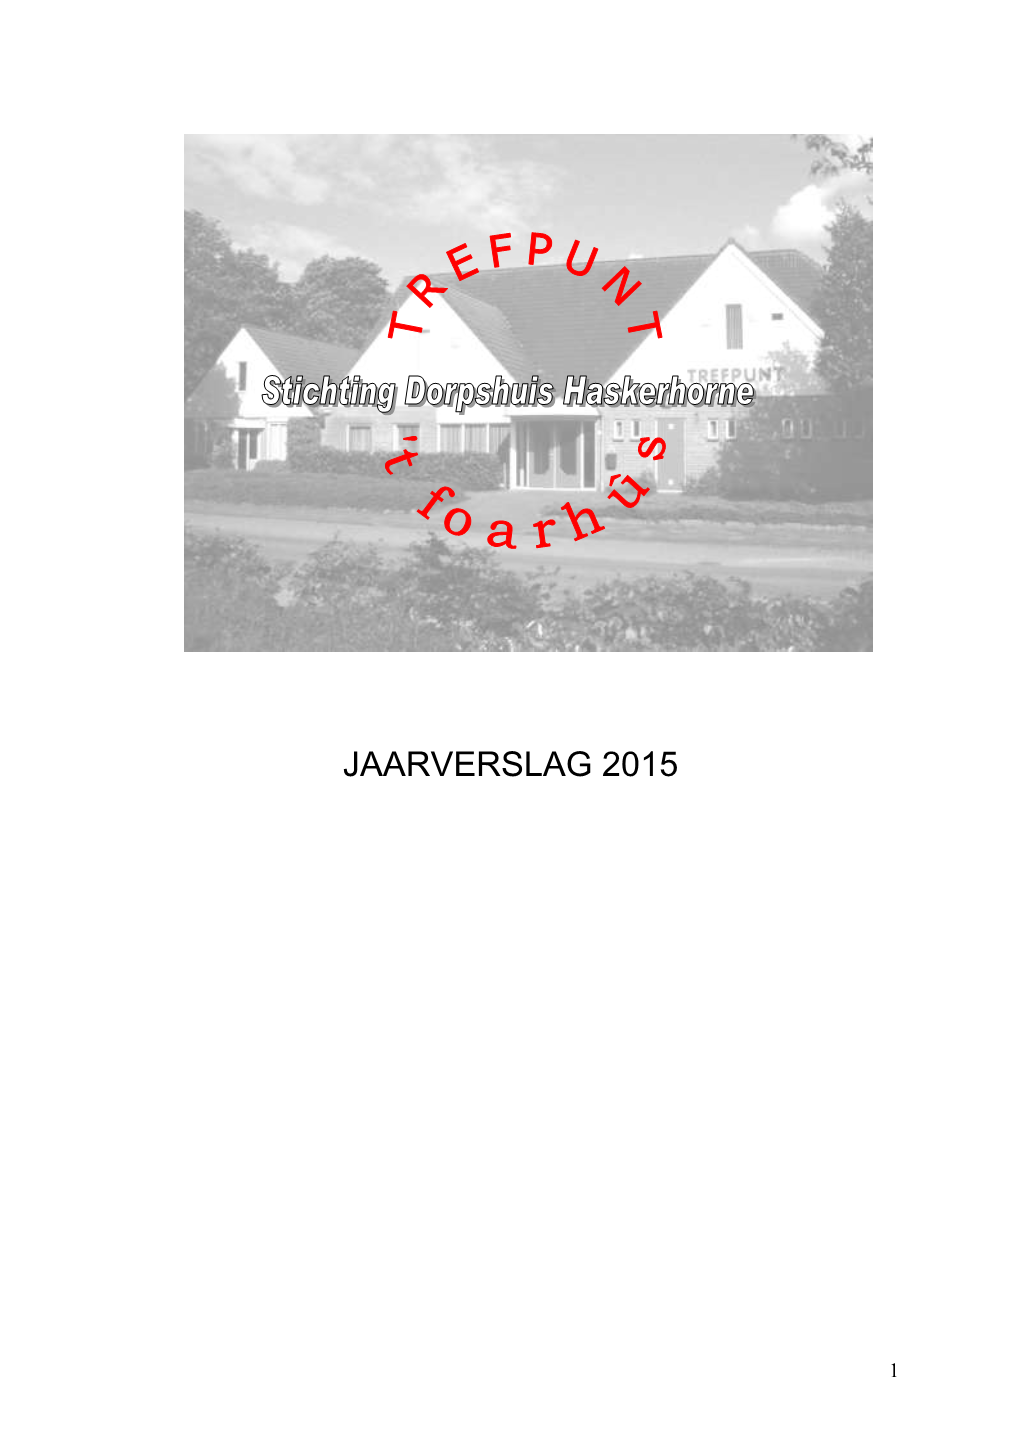 Jaarverslag 2005 Stichting Dorpshuis Haskerhorne